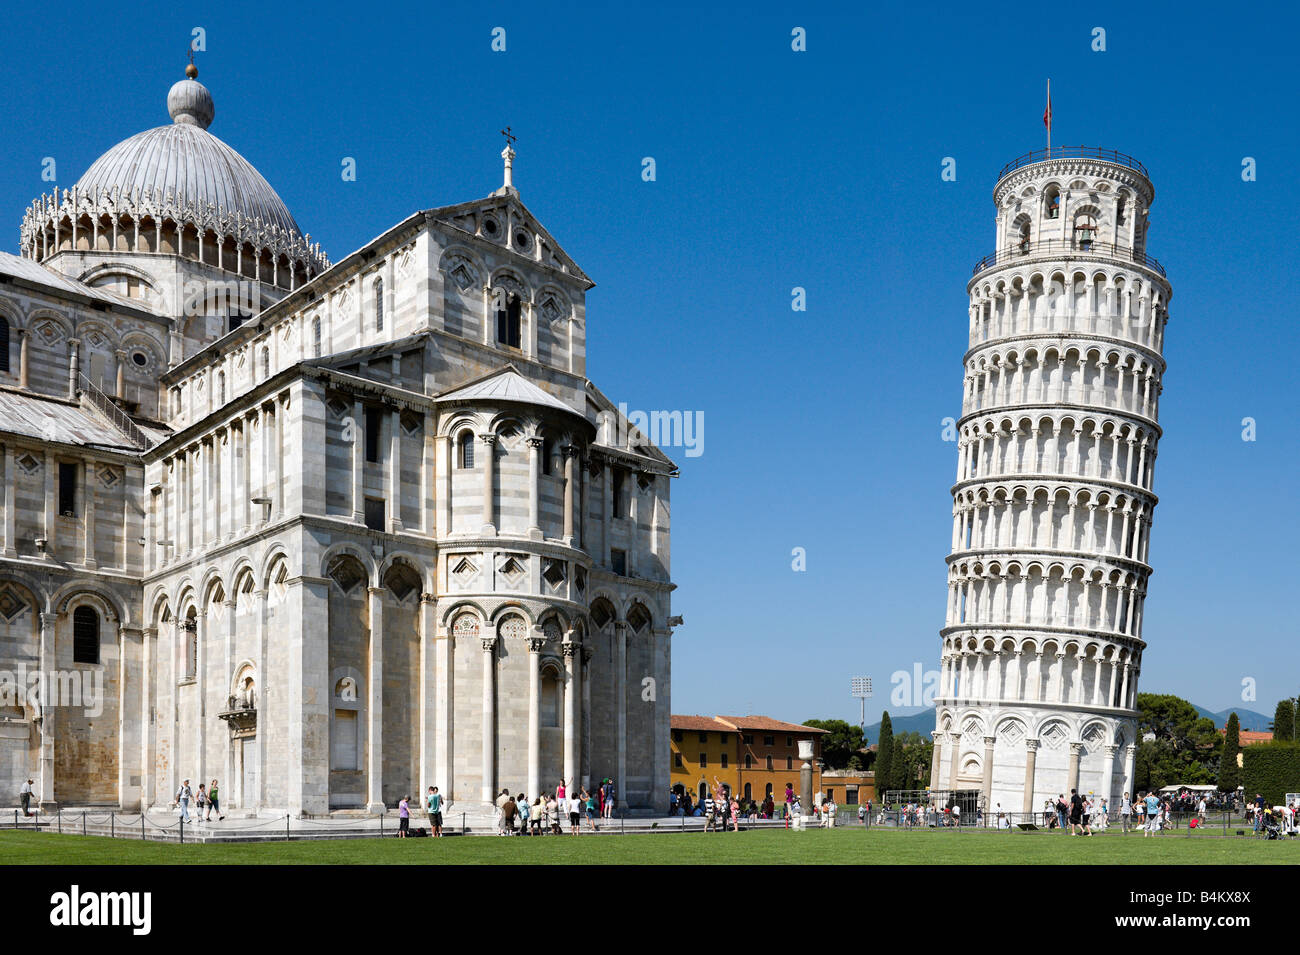 Der Duomo und der schiefe Turm, Piazza dei Miracoli, Pisa, Toskana, Italien Stockfoto